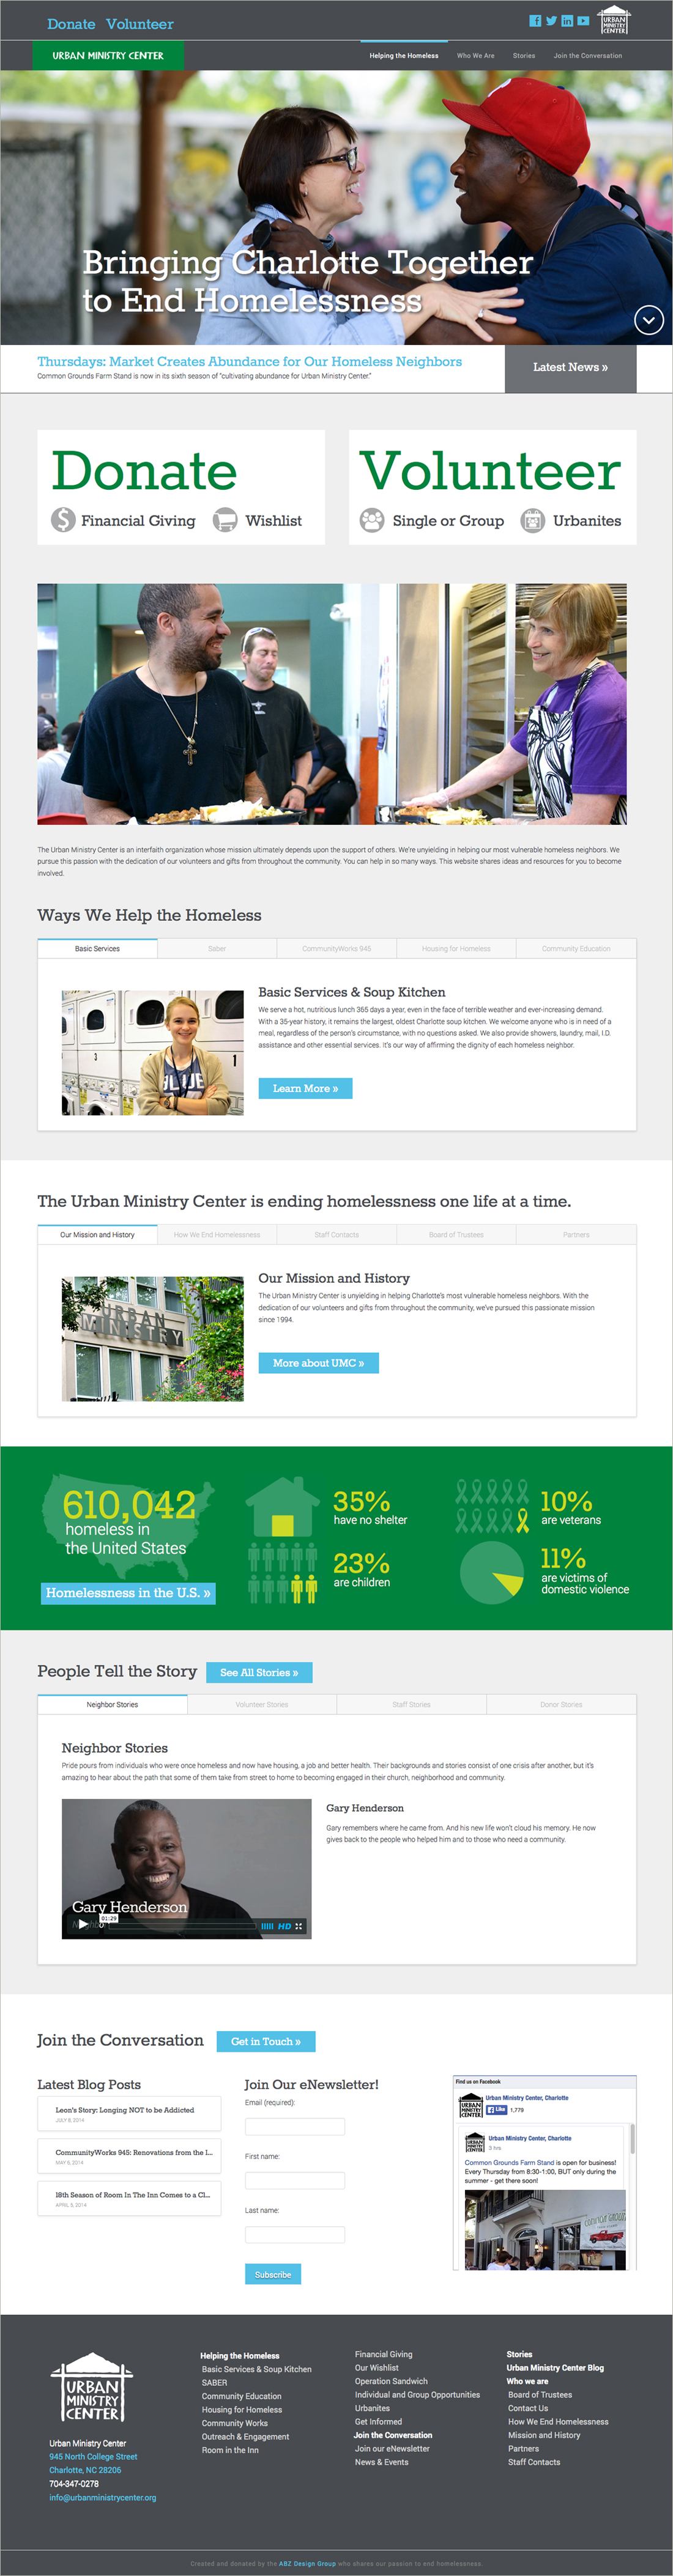 Urban Ministry Center website - desktop homepage